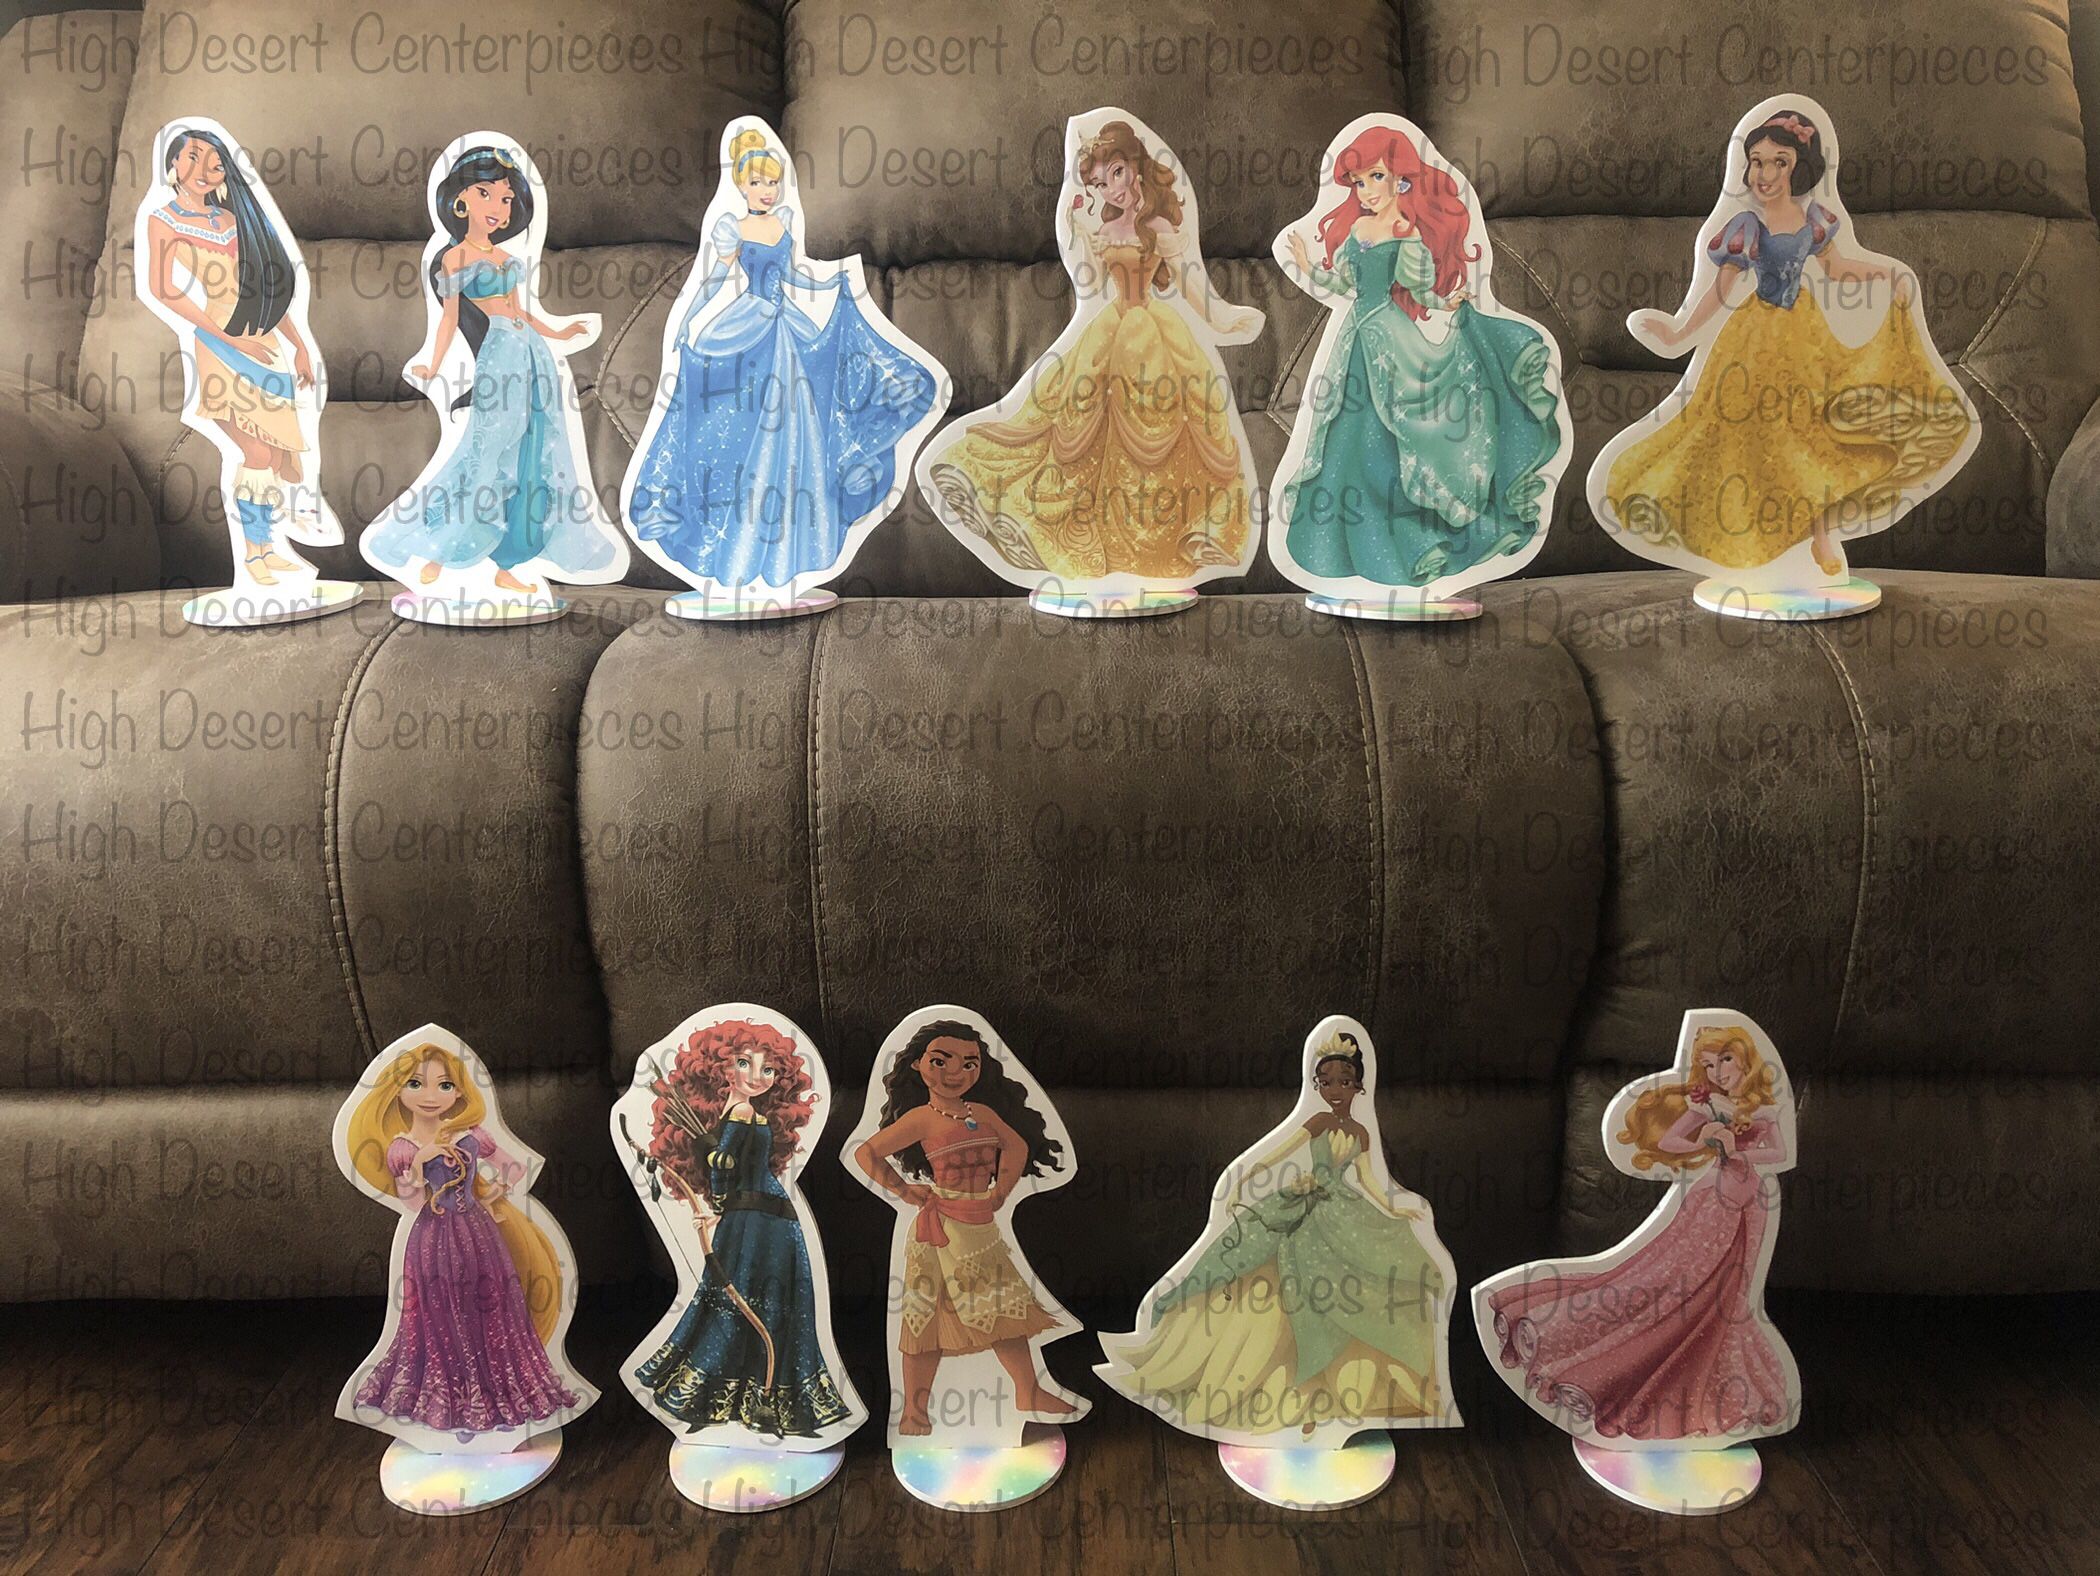 Disney Princess Centerpieces